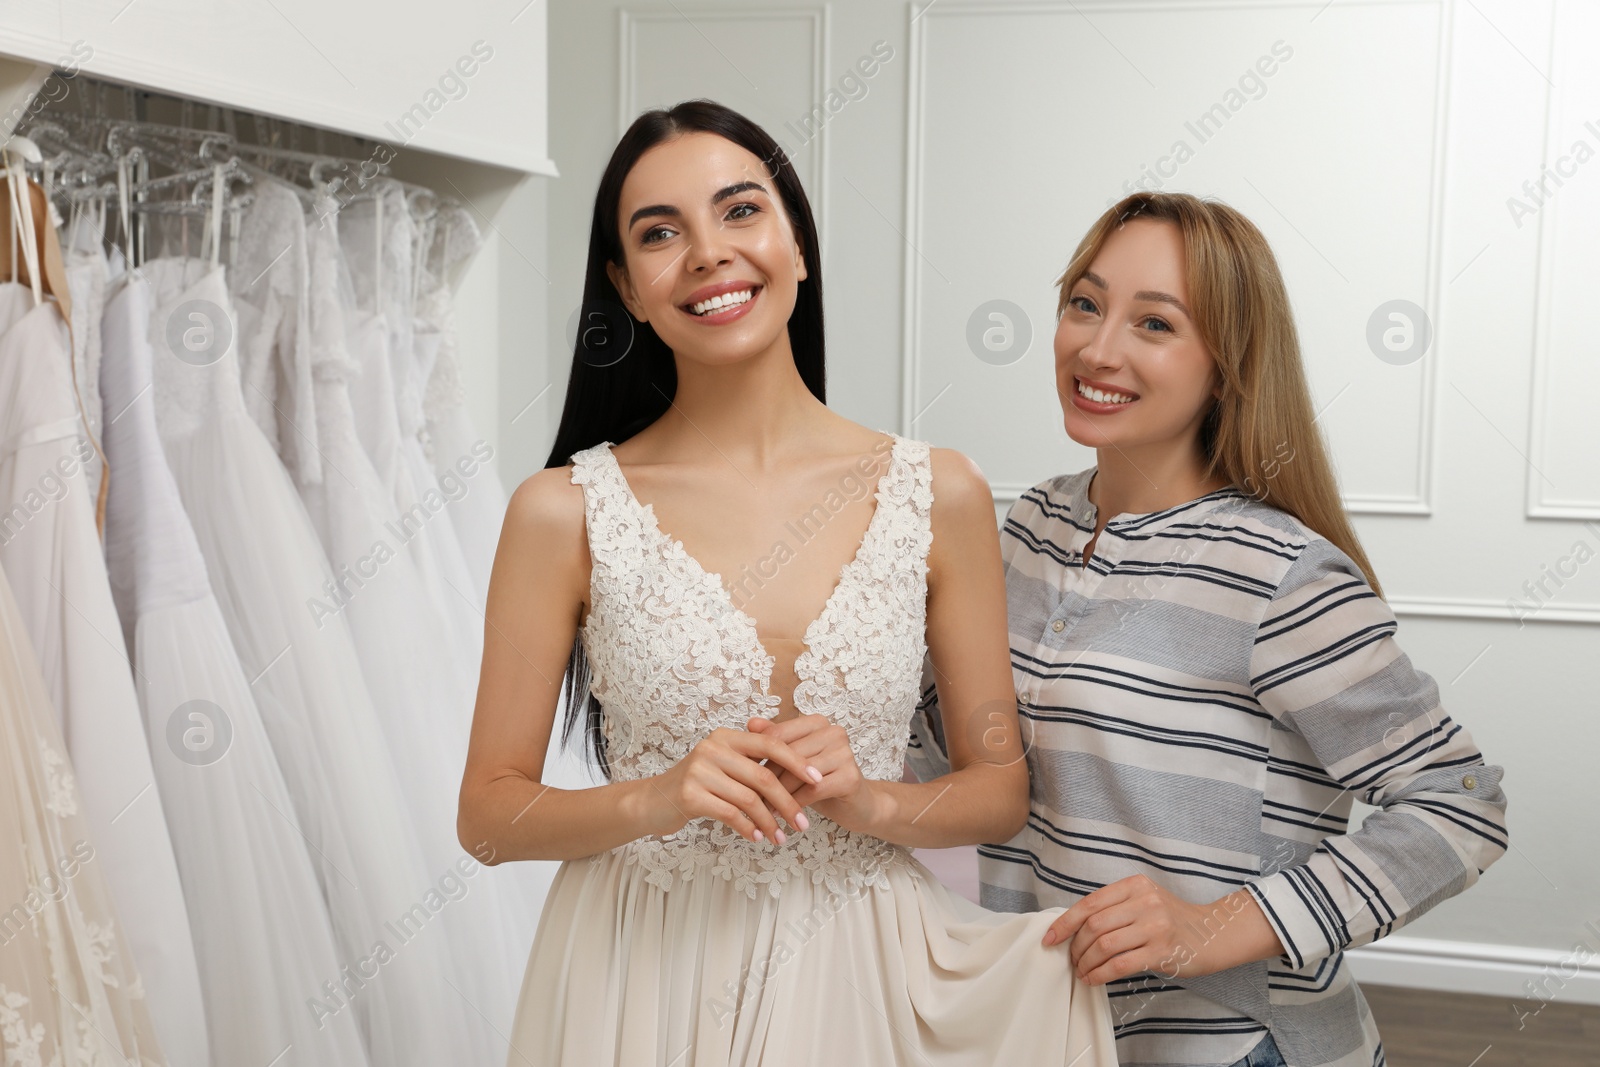 Photo of Woman helping bride wear wedding dress in boutique